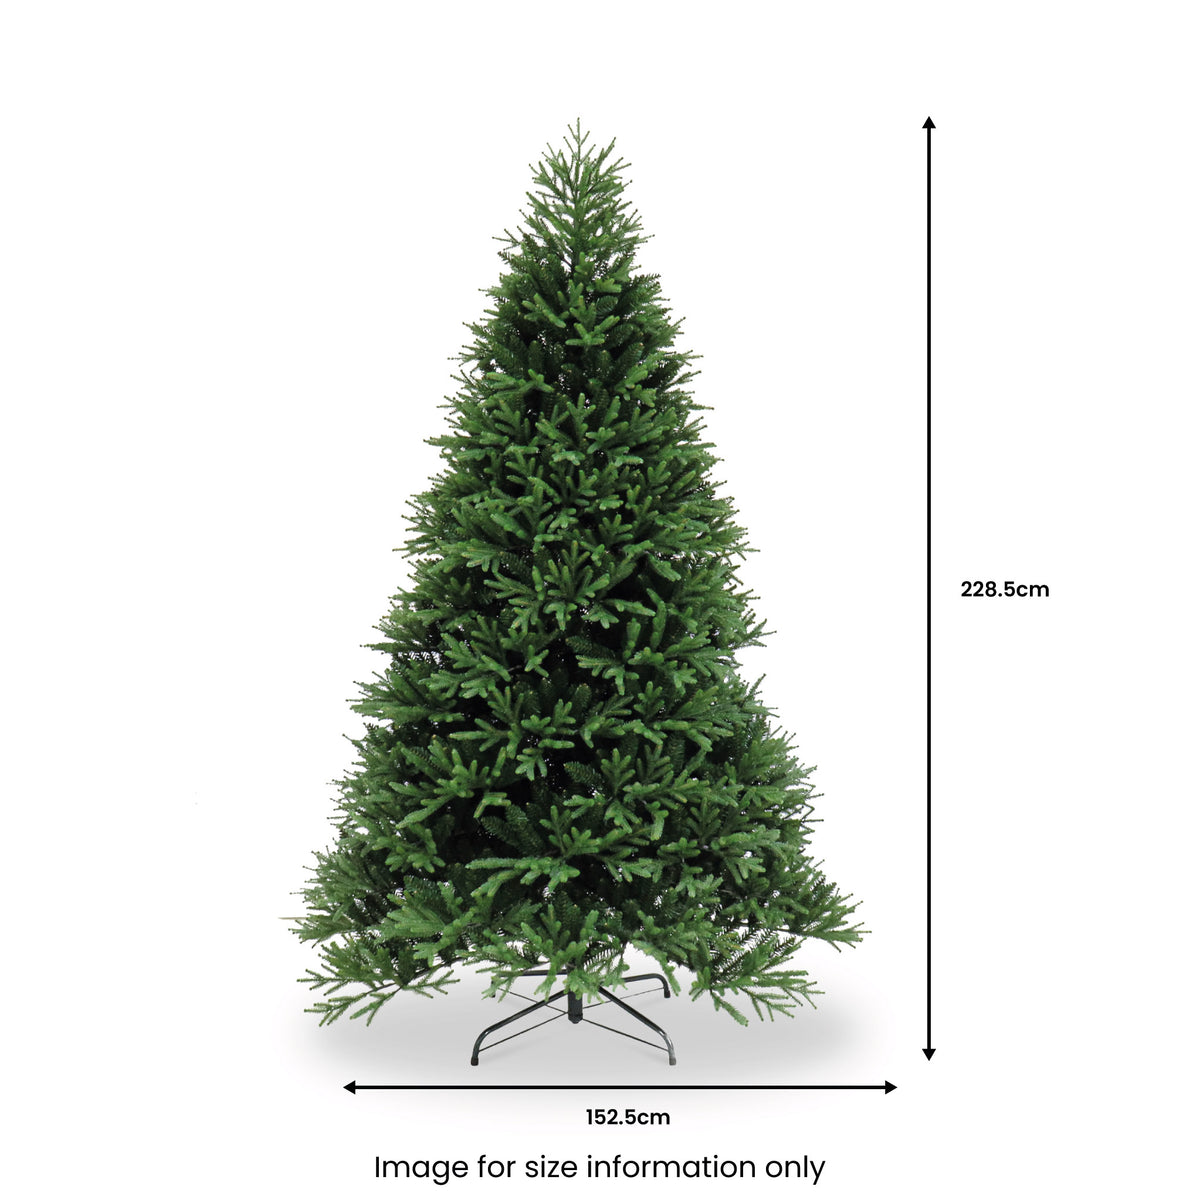 Royal Fir 7.5ft Christmas Tree from Roseland